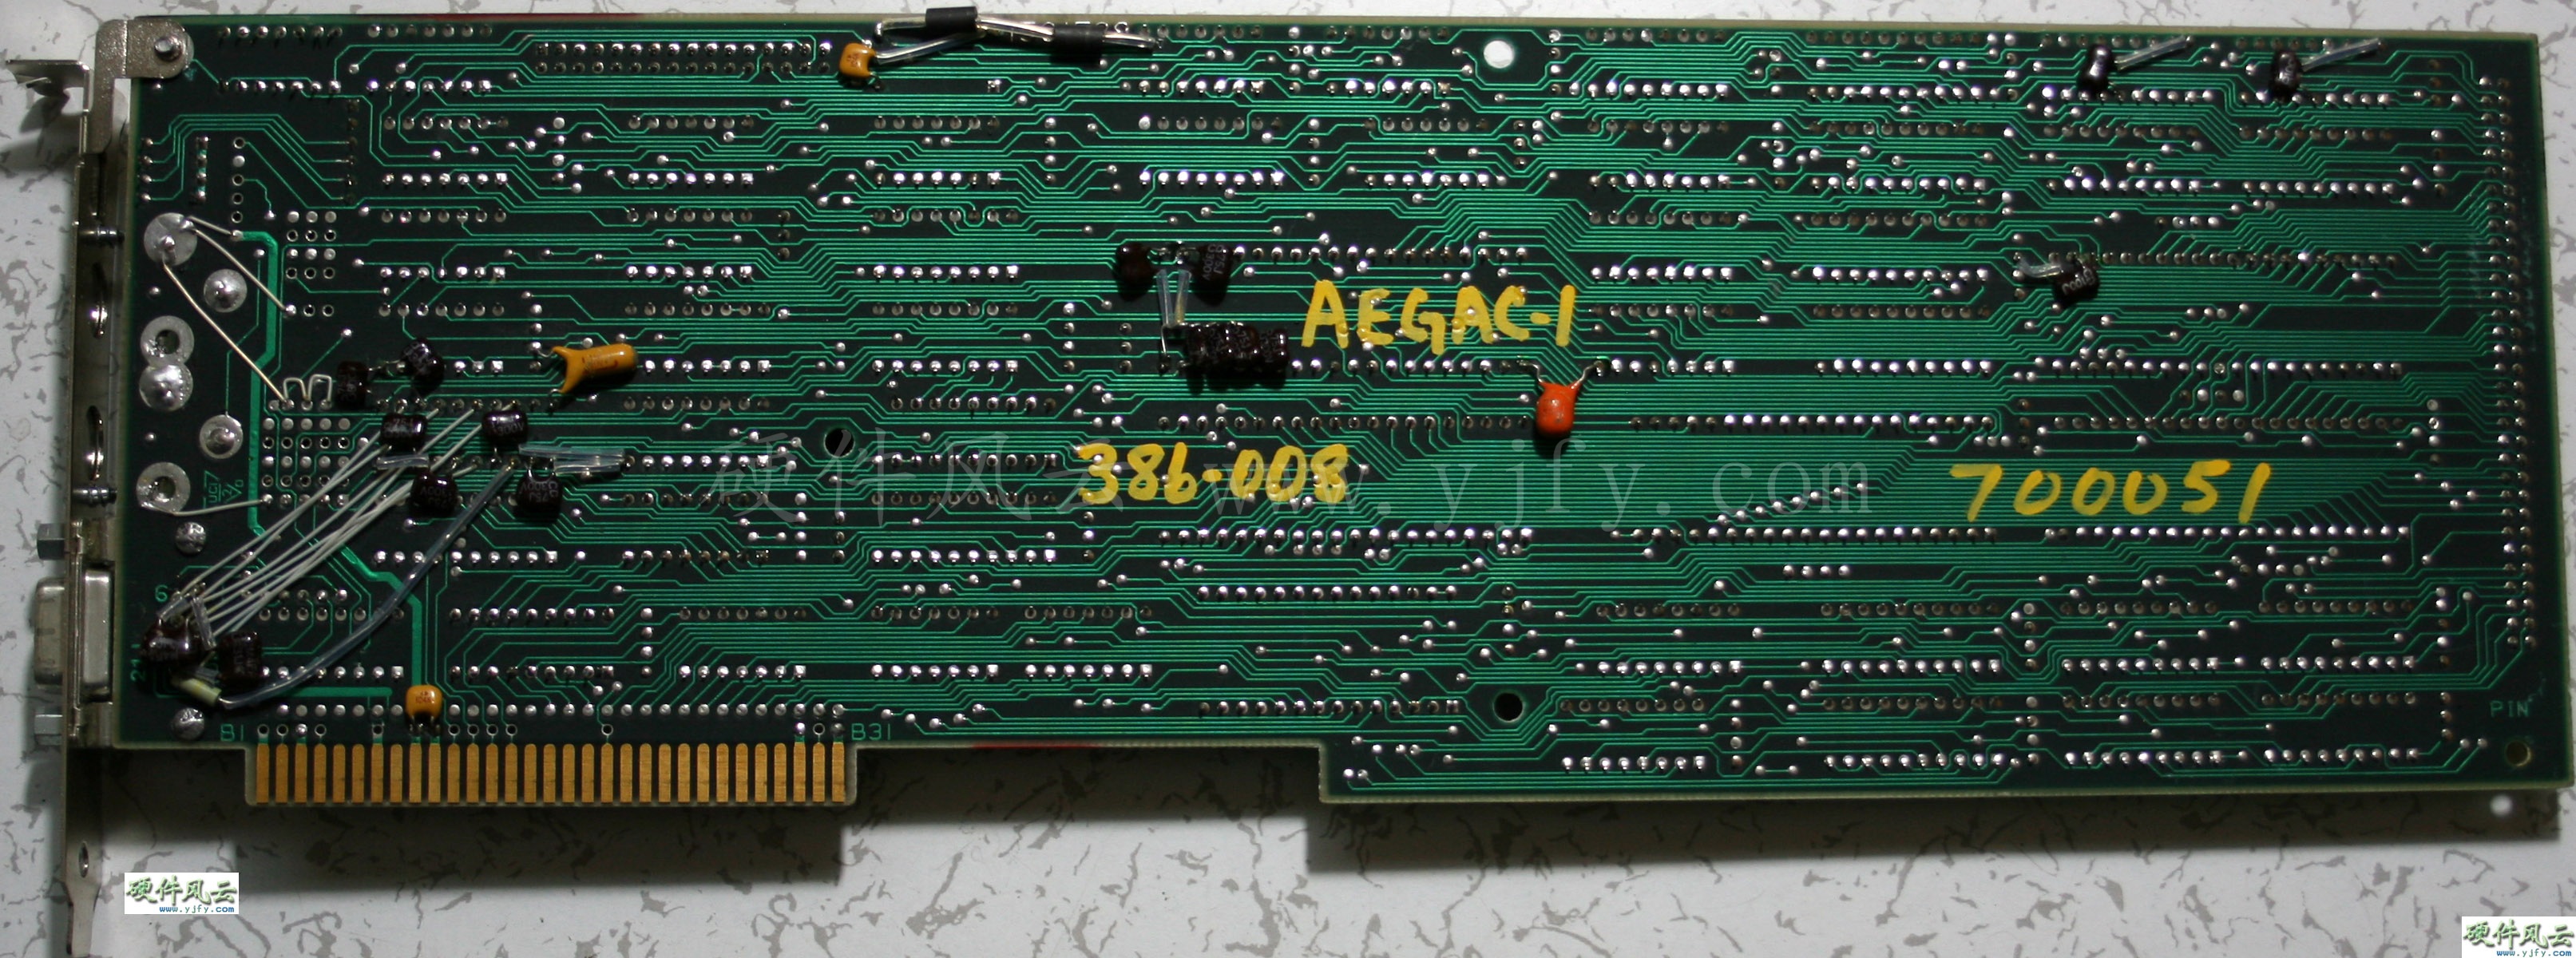 AEGAC-1.jpg